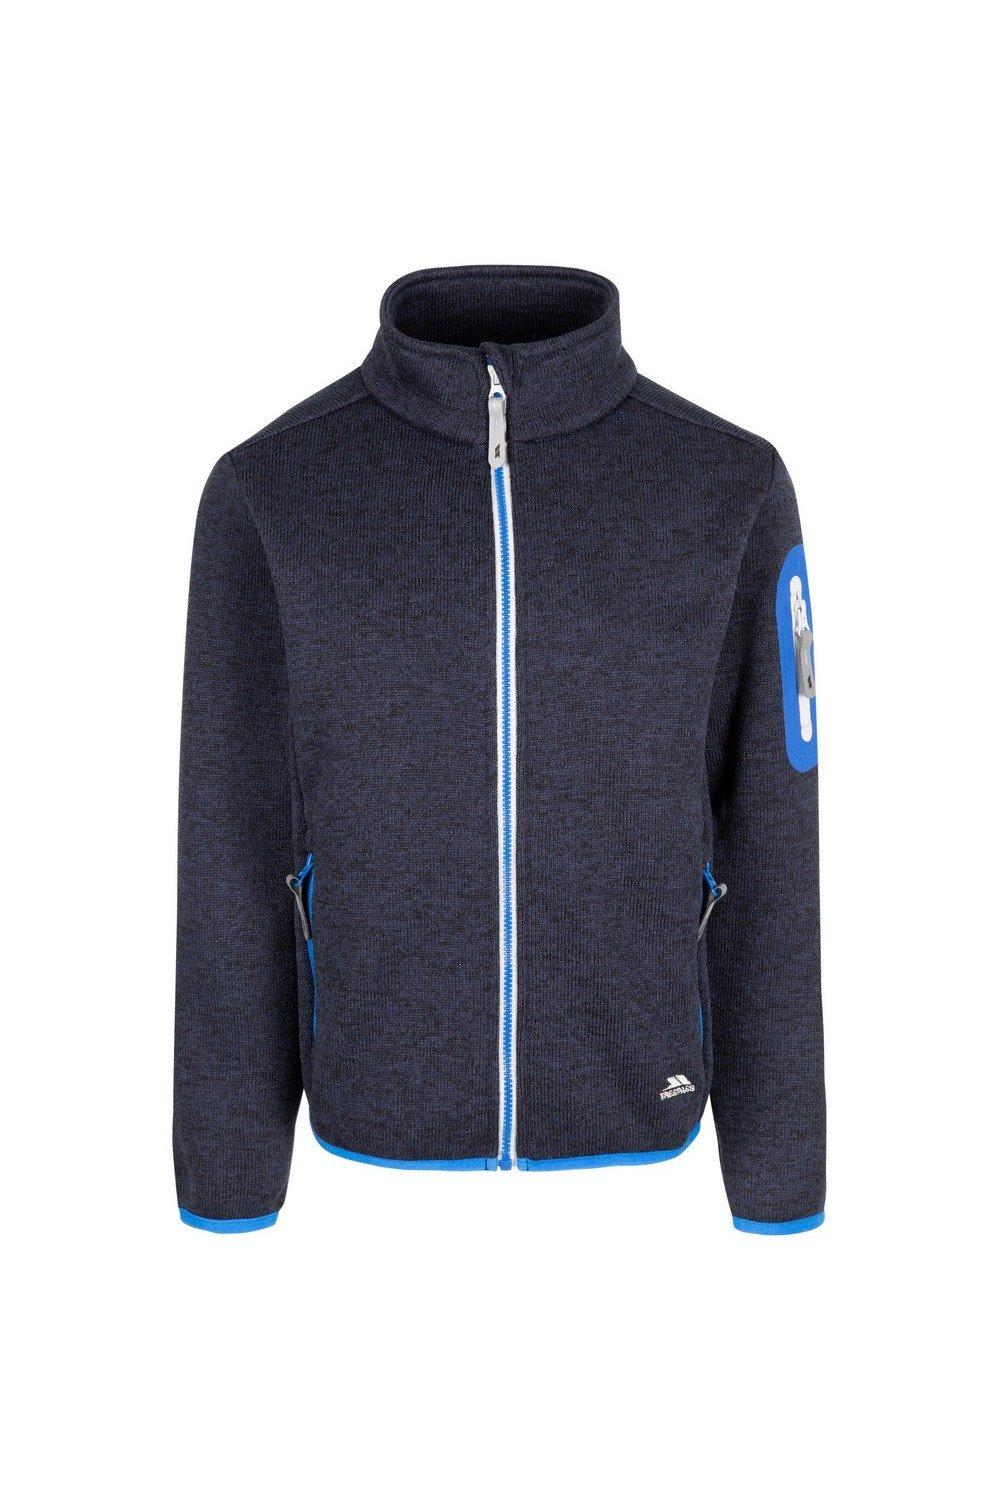 Флисовая куртка Whisk AT300 Trespass, темно-синий